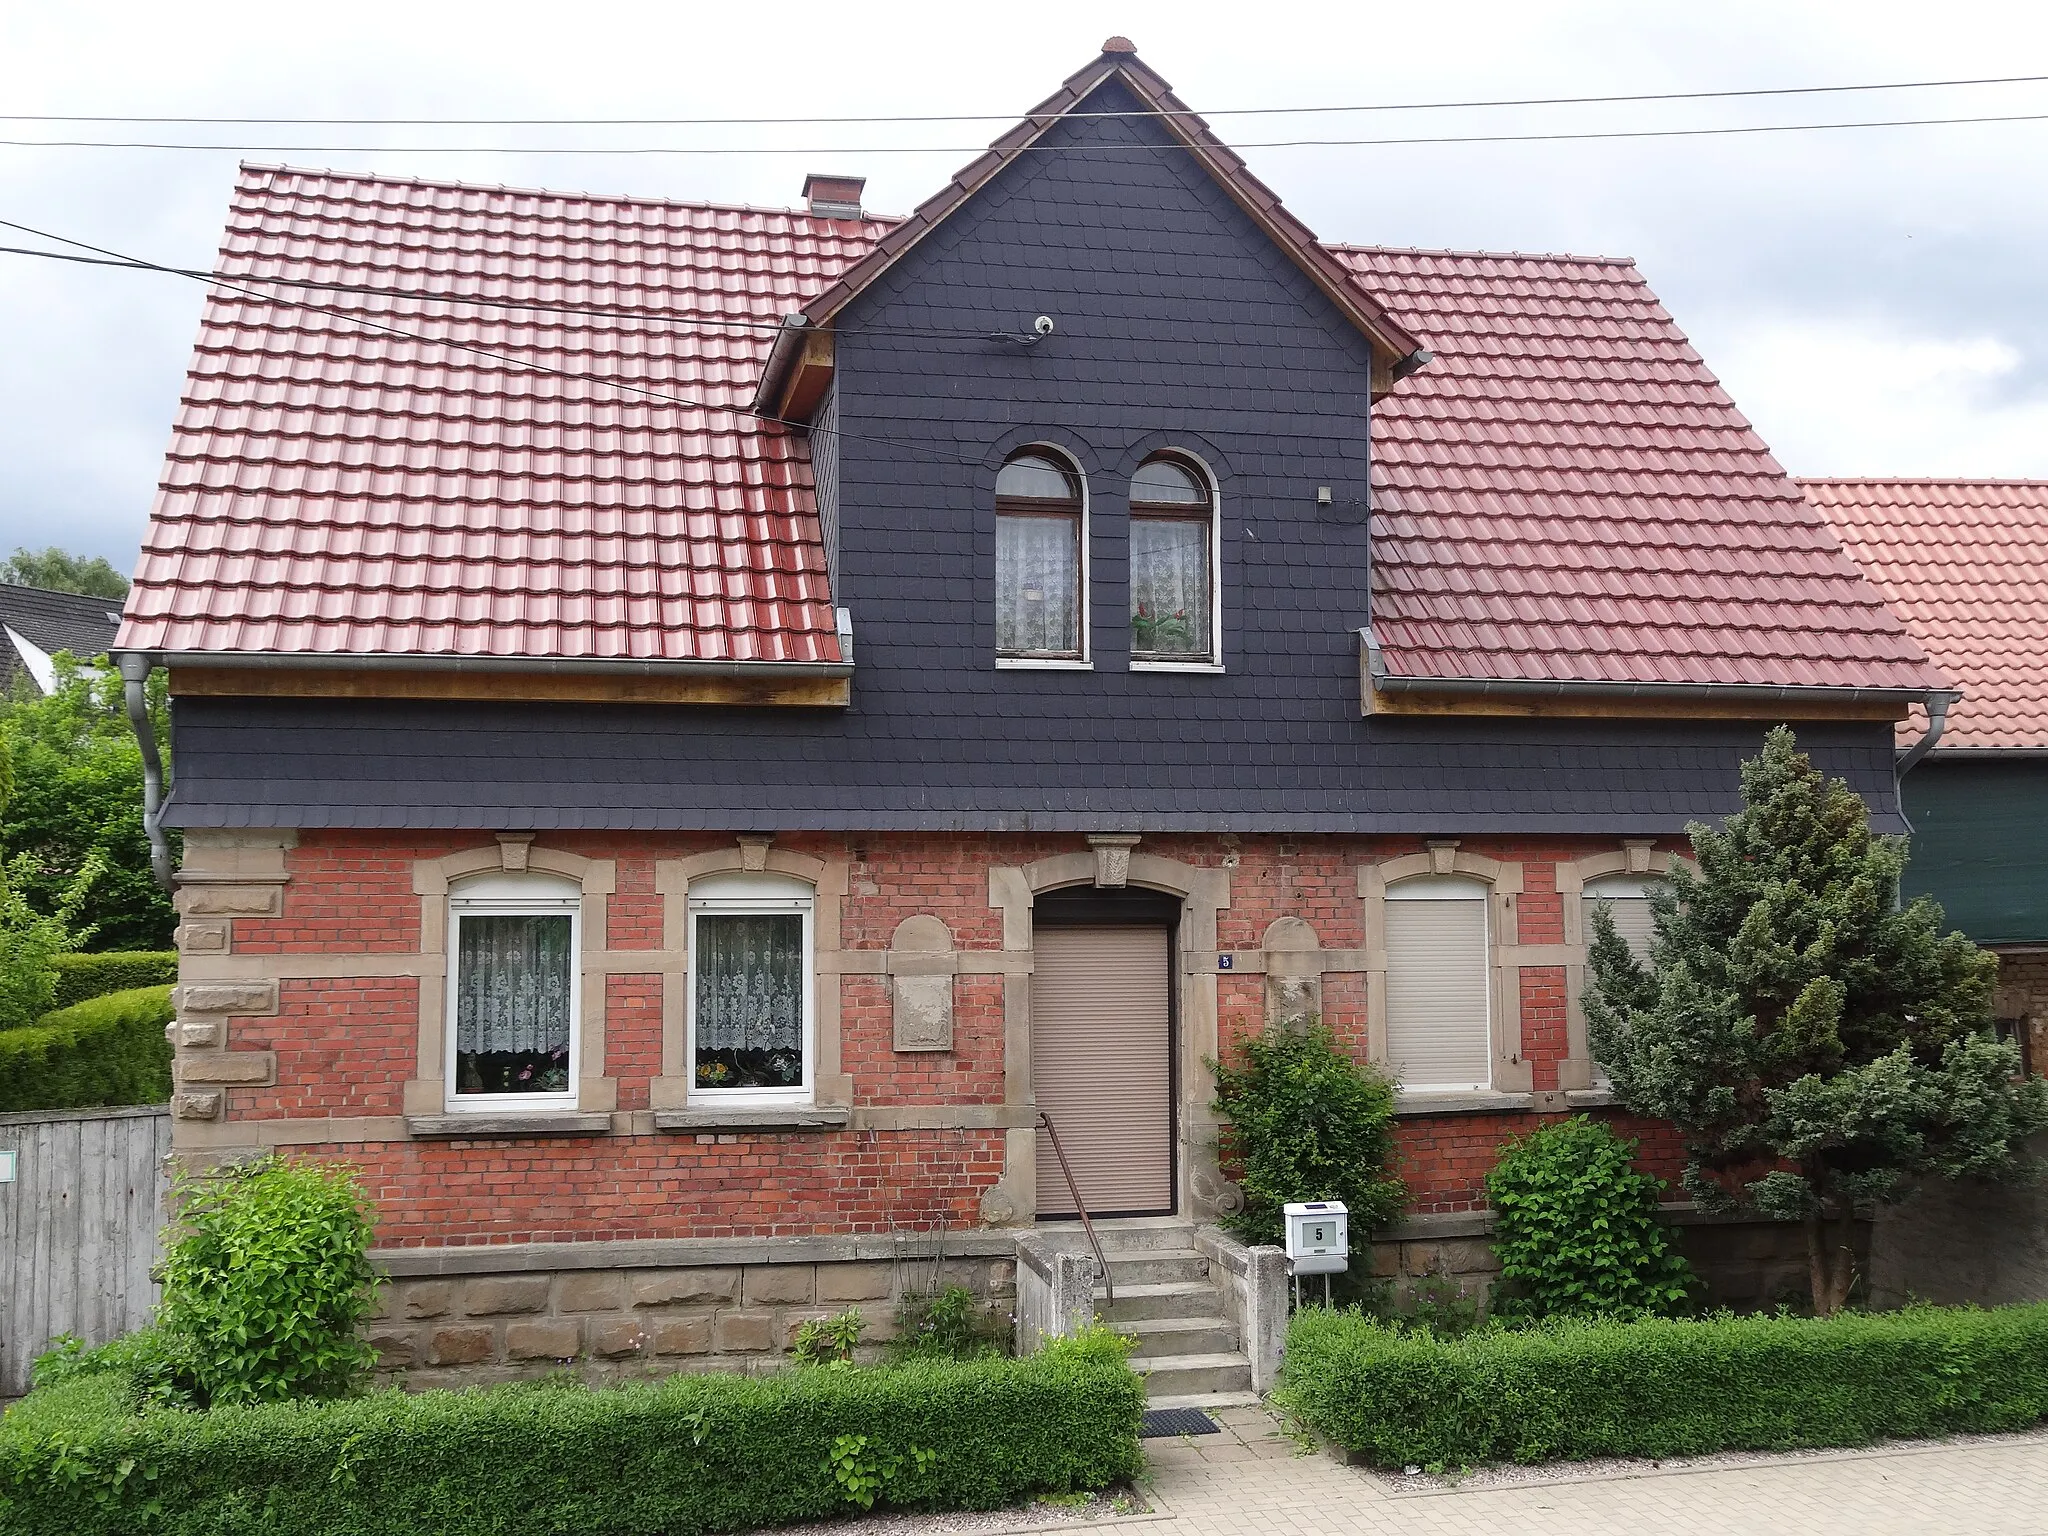 Photo showing: House in Rothenberga, Thuringia, Germany